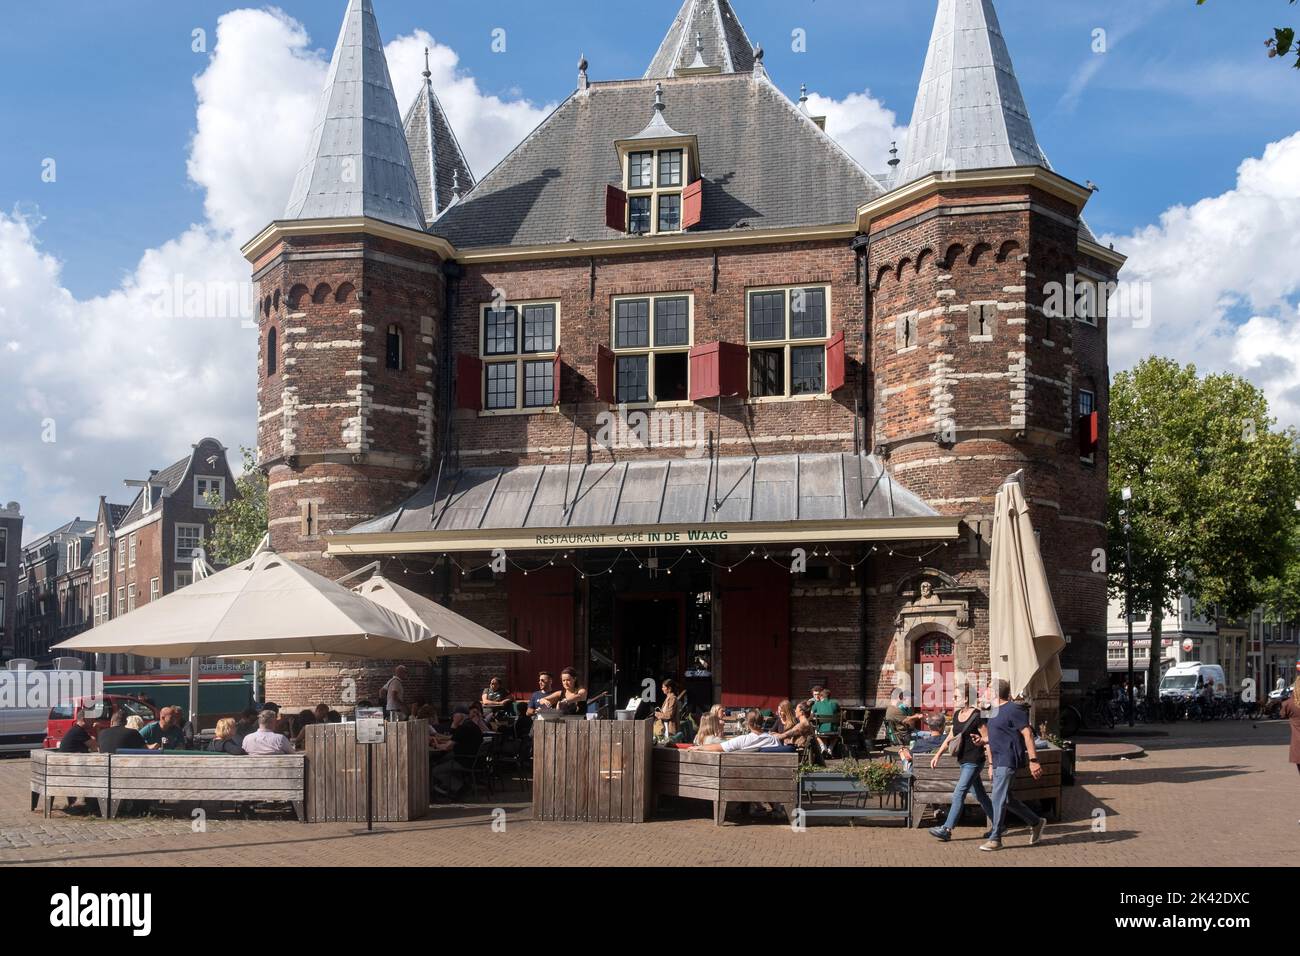 Cade de Waag / The Weigh House, Nieuwmarkt Square, Amsterdam, The Netherlands Stock Photo